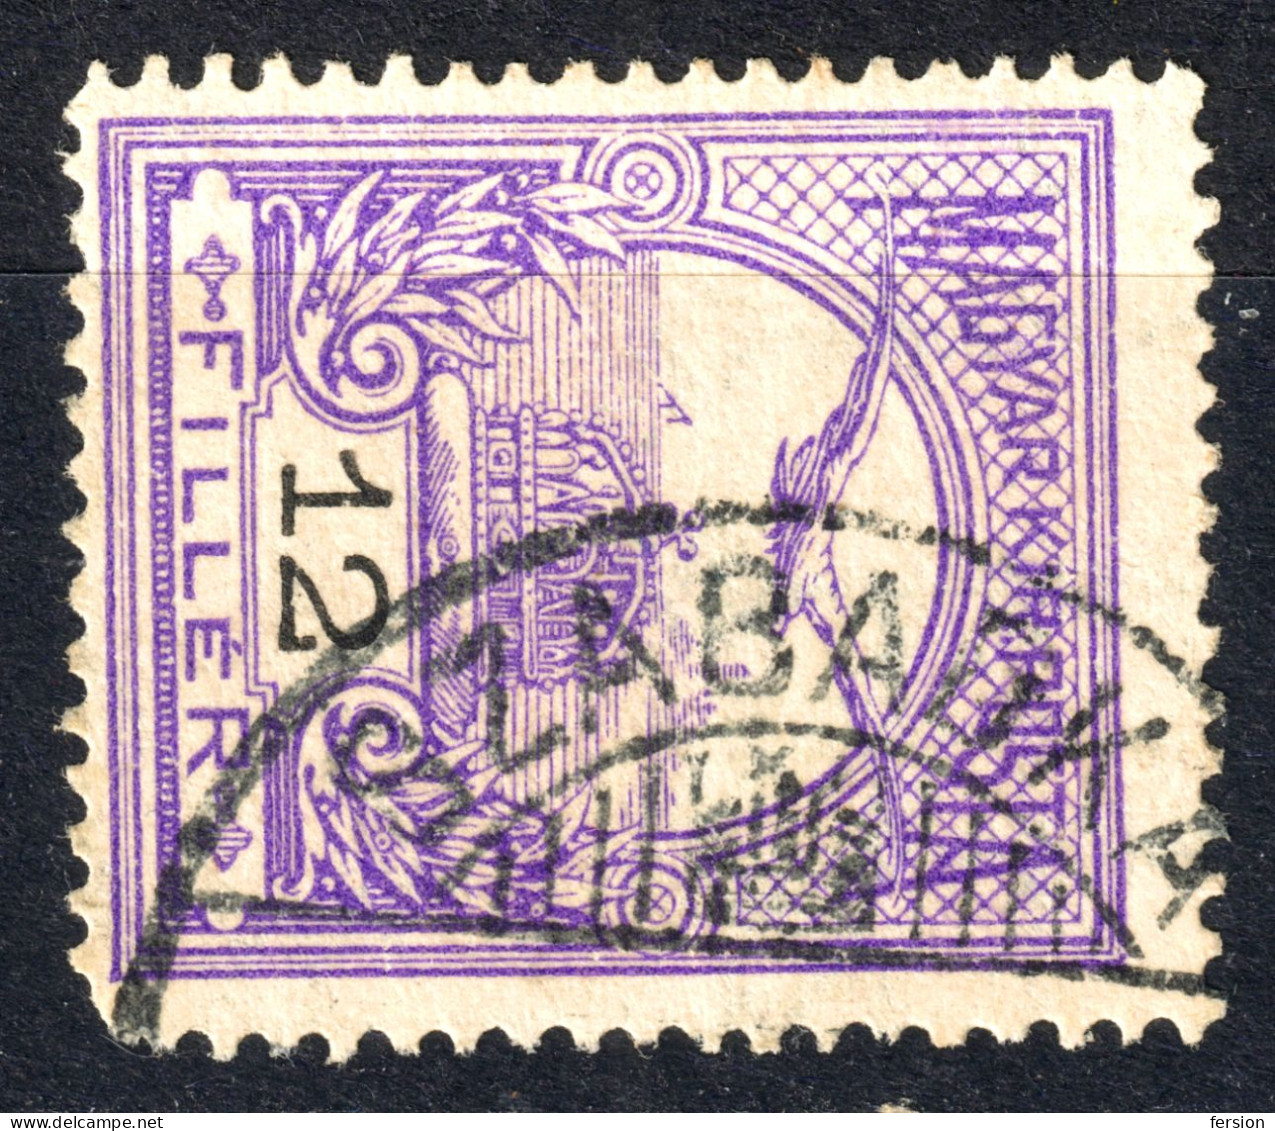 SZABADKA Subotica Postmark TURUL Crown 1910's Hungary SERBIA Vojvodina Bačka BÁCS BODROG County KuK - 12 Fill - Préphilatélie